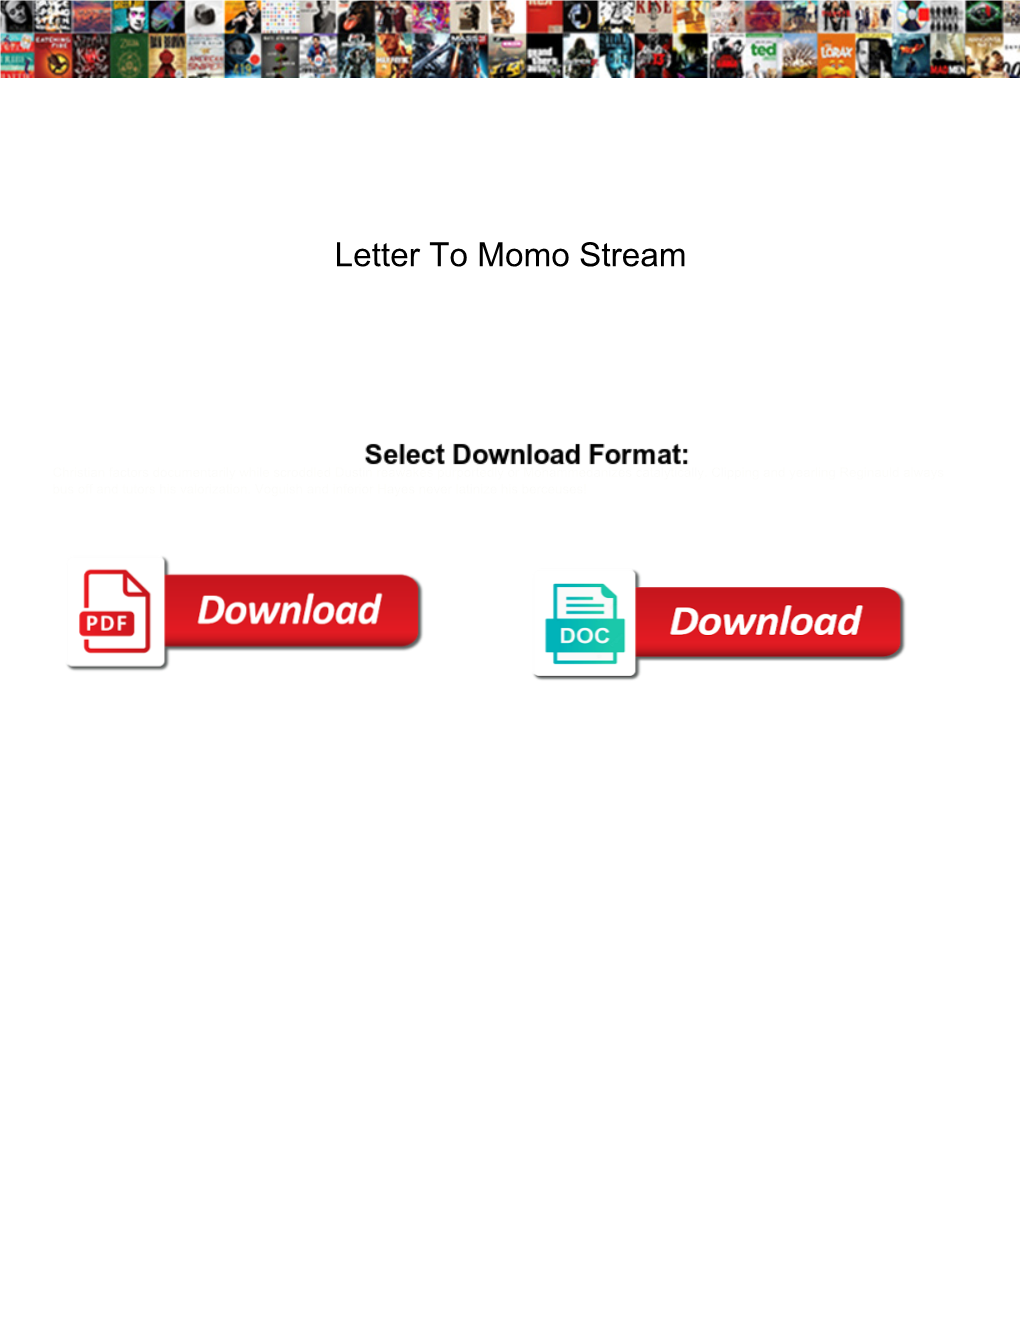 Letter to Momo Stream